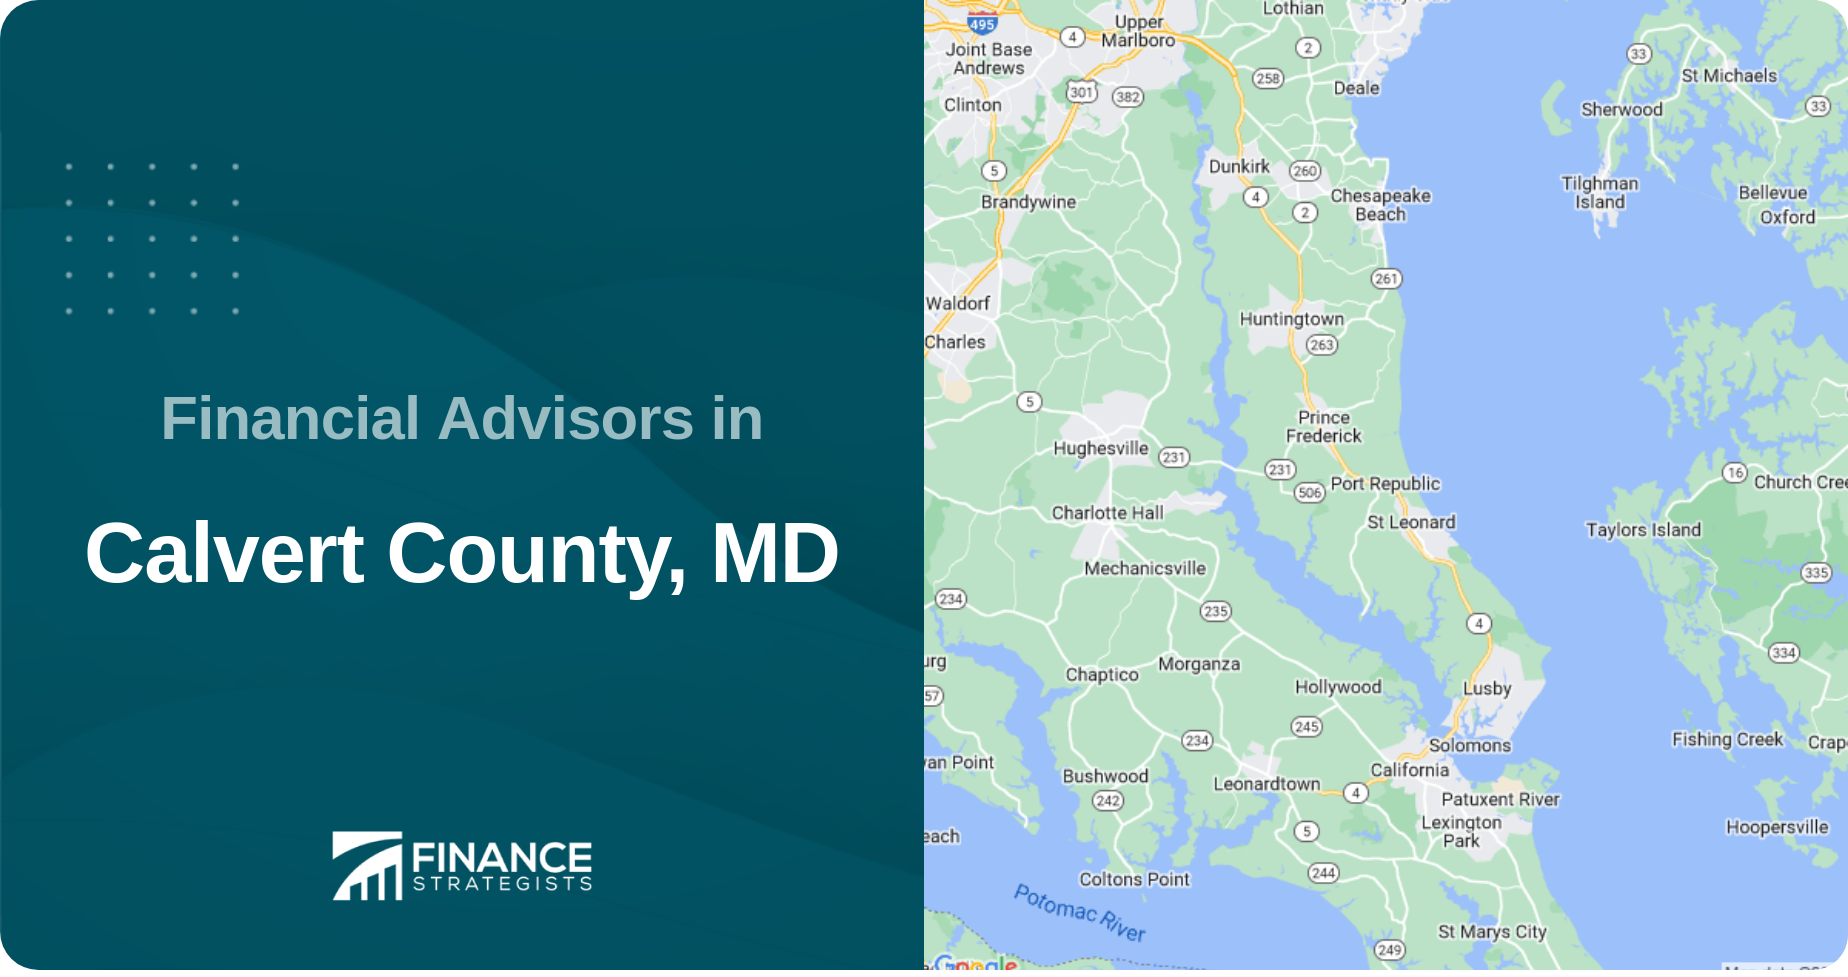 Financial Advisors in Calvert County, MD